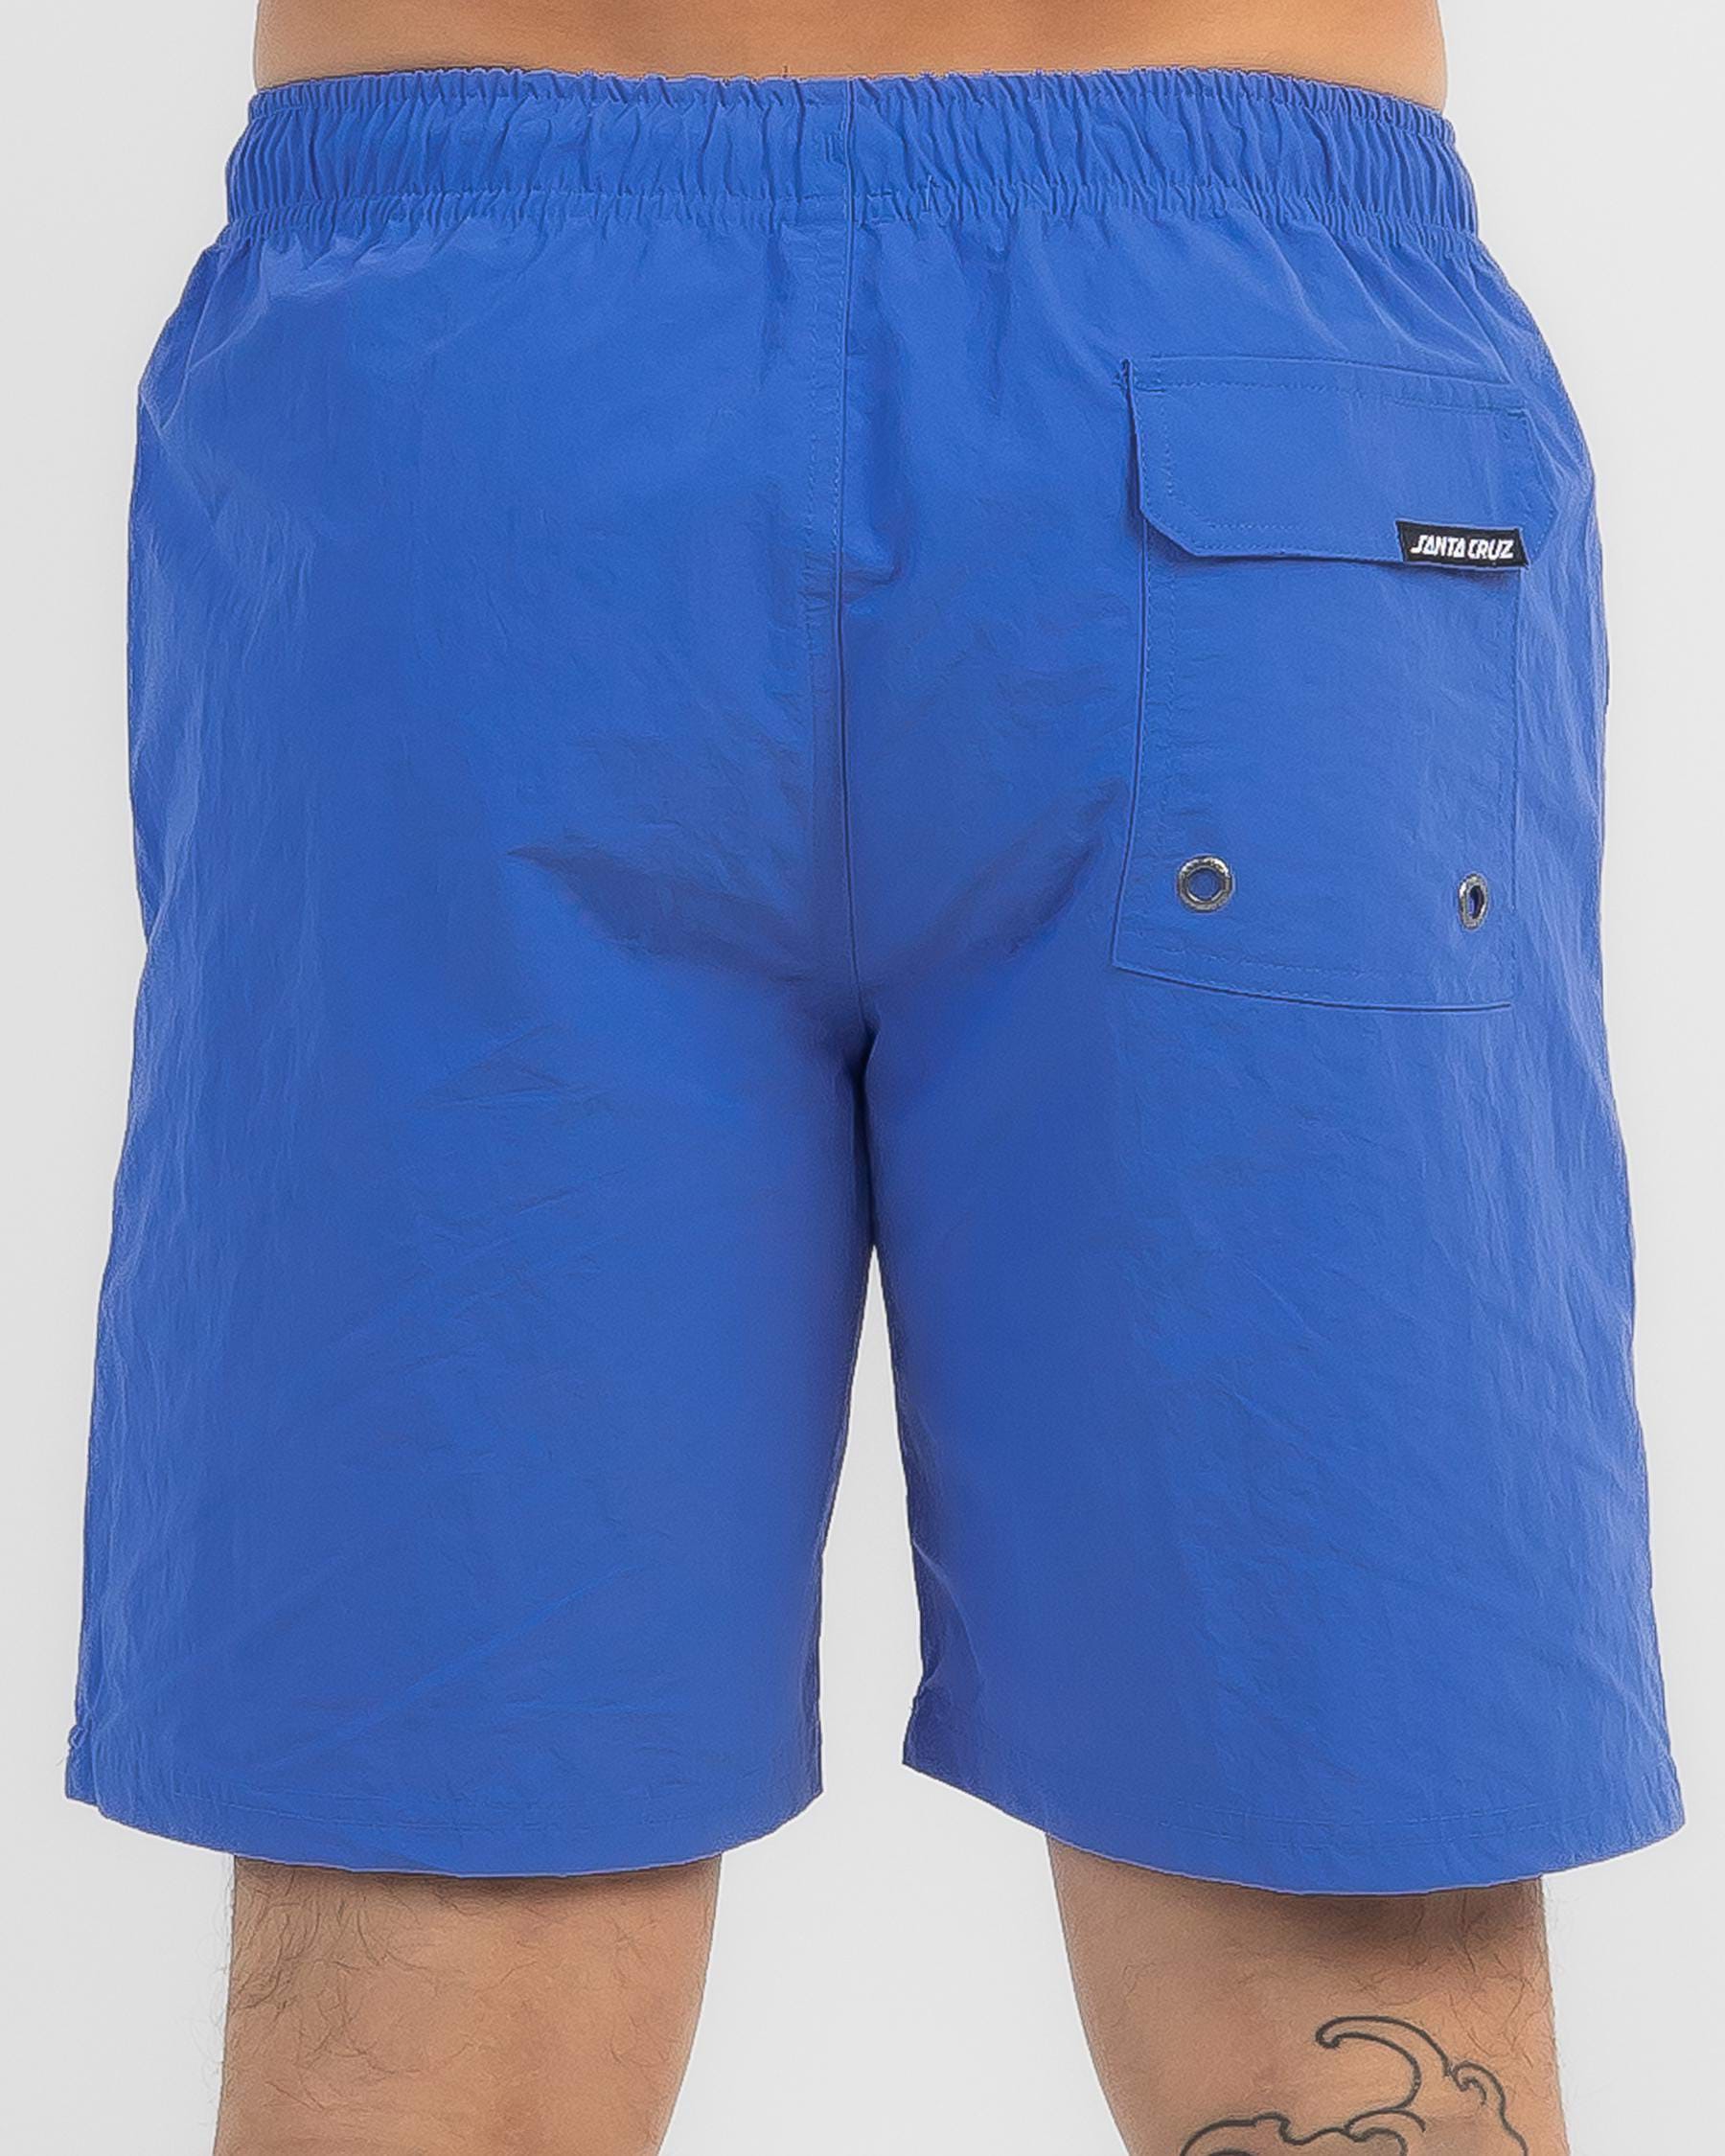 Santa Cruz Classic Dot Cruzier Elastic Shorts In Blue - Fast Shipping ...